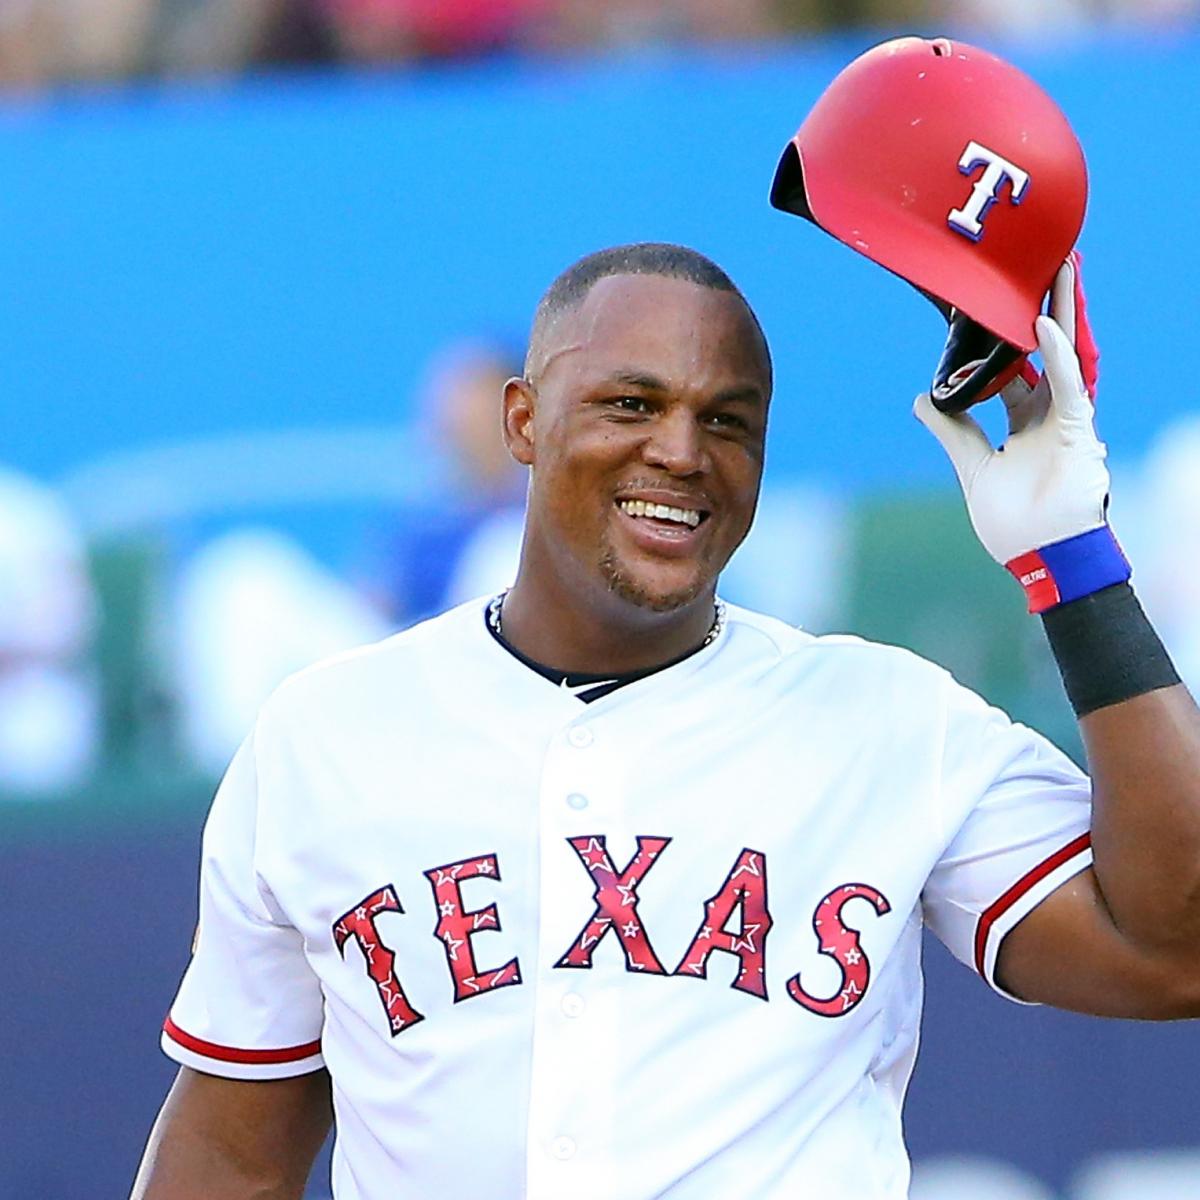 Adrian Beltre Texas Rangers 400 Home Runs HR Tshirt size men's XL Baseball  MLB